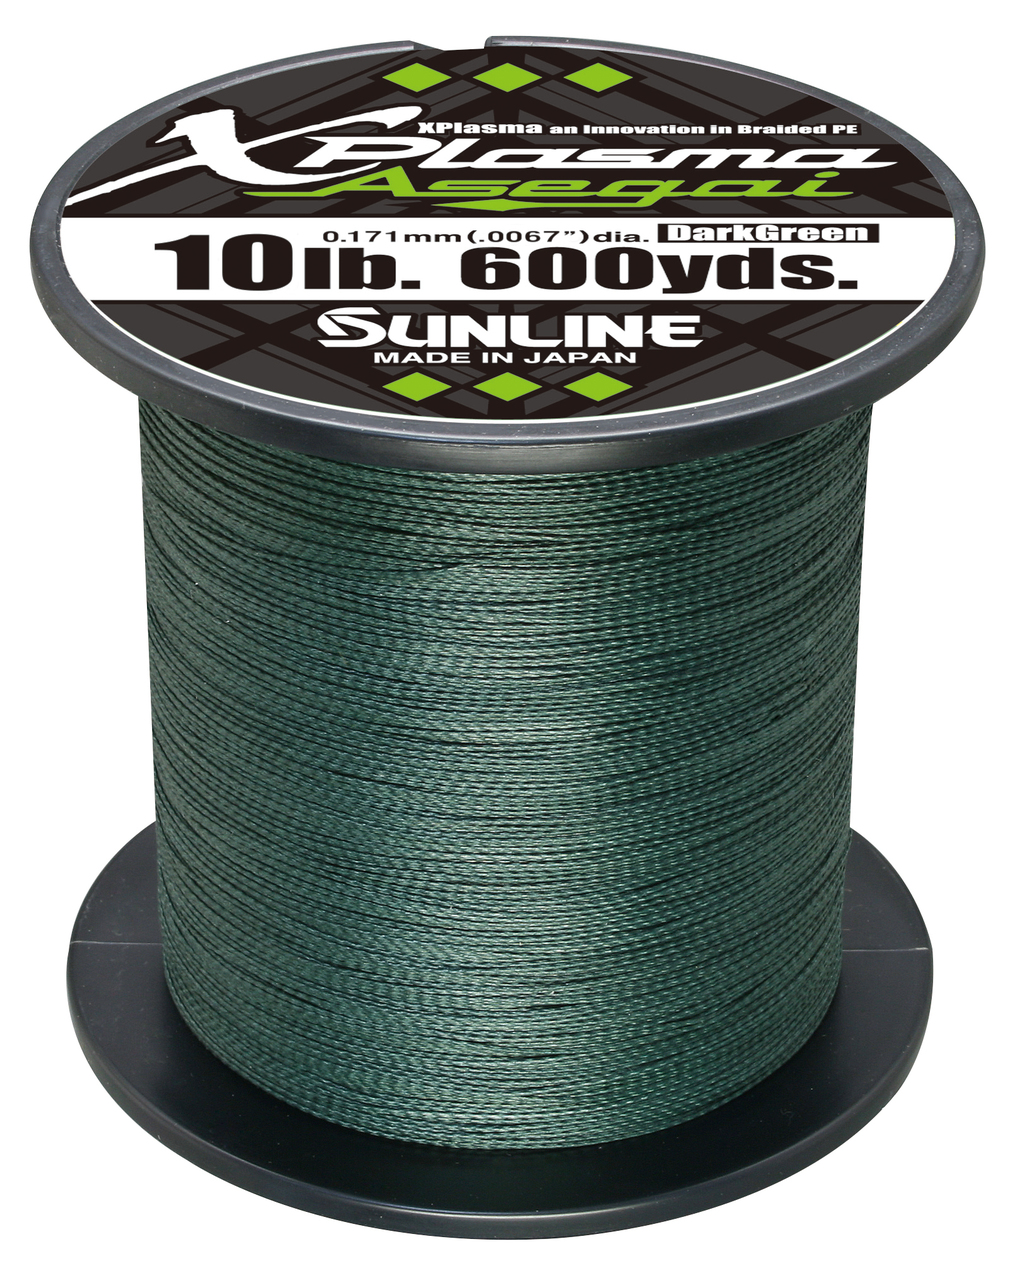 Sunline Xplasma Asegai Green Braided Line 600 Yards 